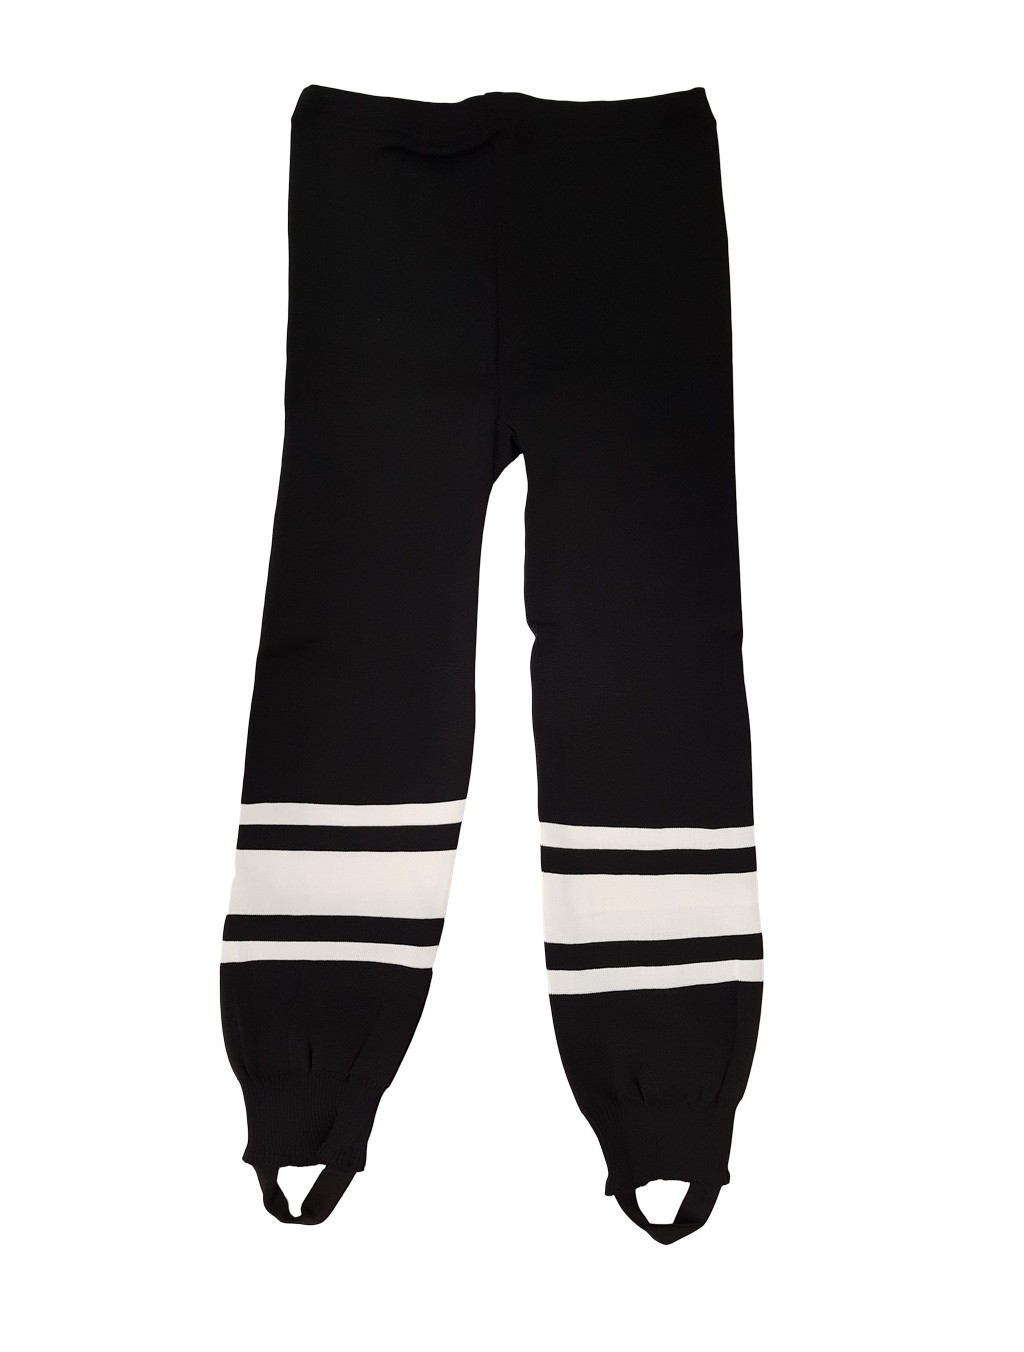 HOKEJAM Knit Adult Hockey Sock Pants#001